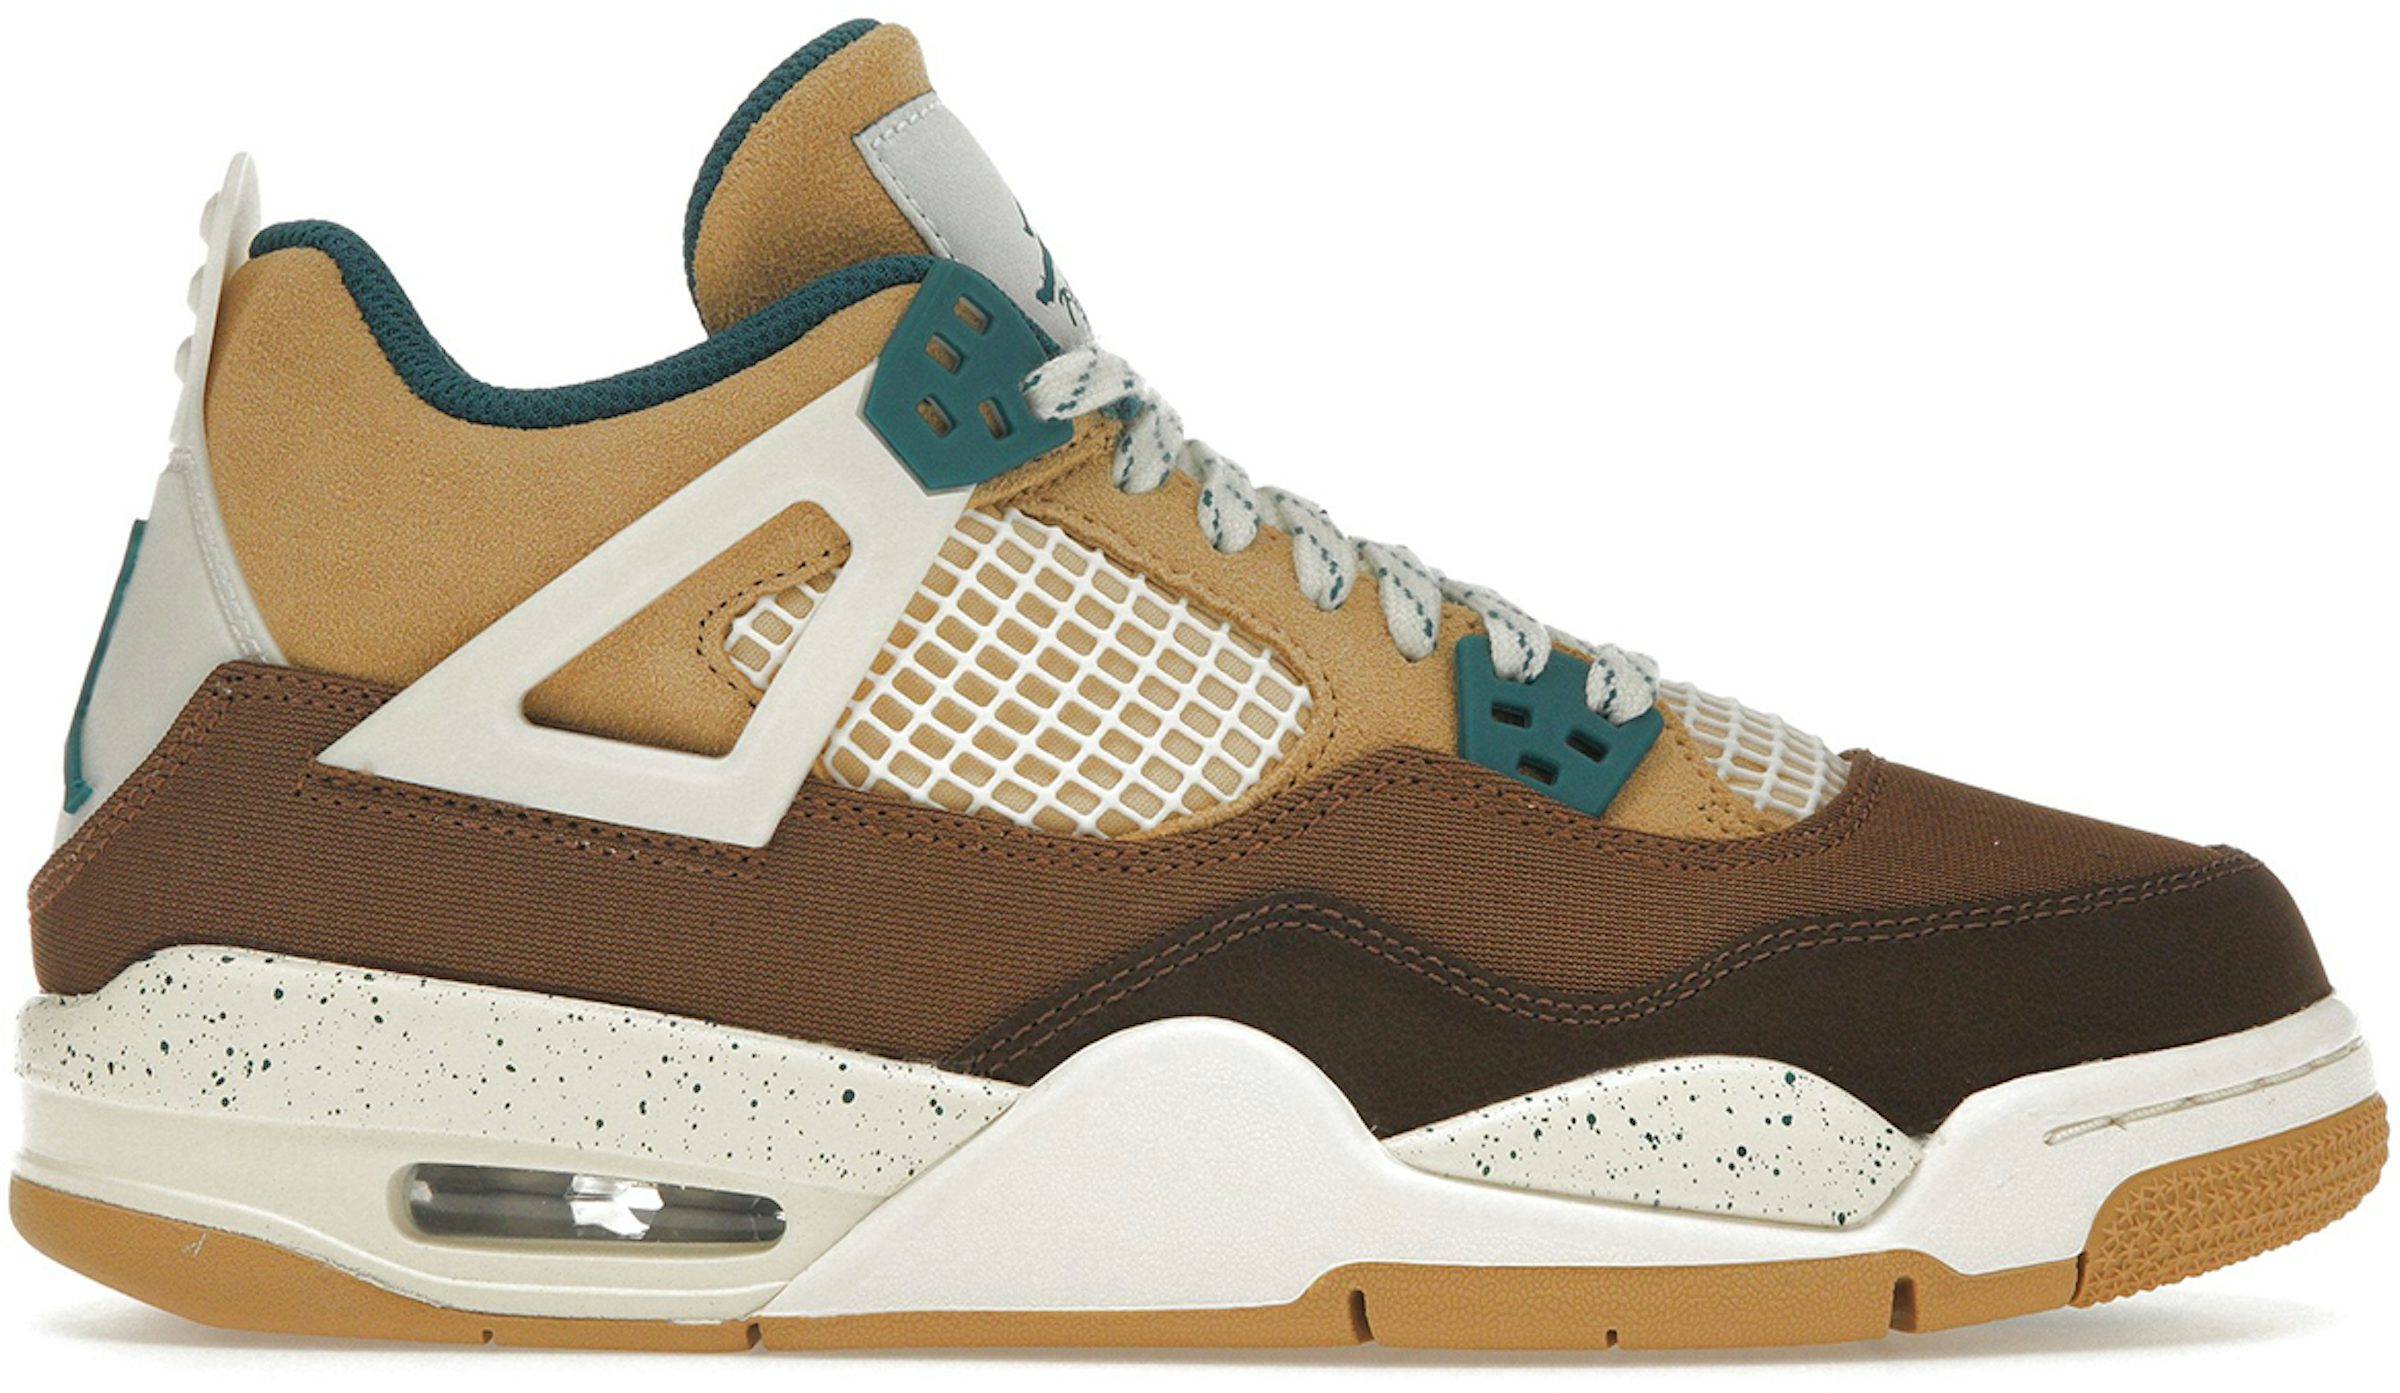 Air Jordan OVO All Star Collection - Sneaker Bar Detroit